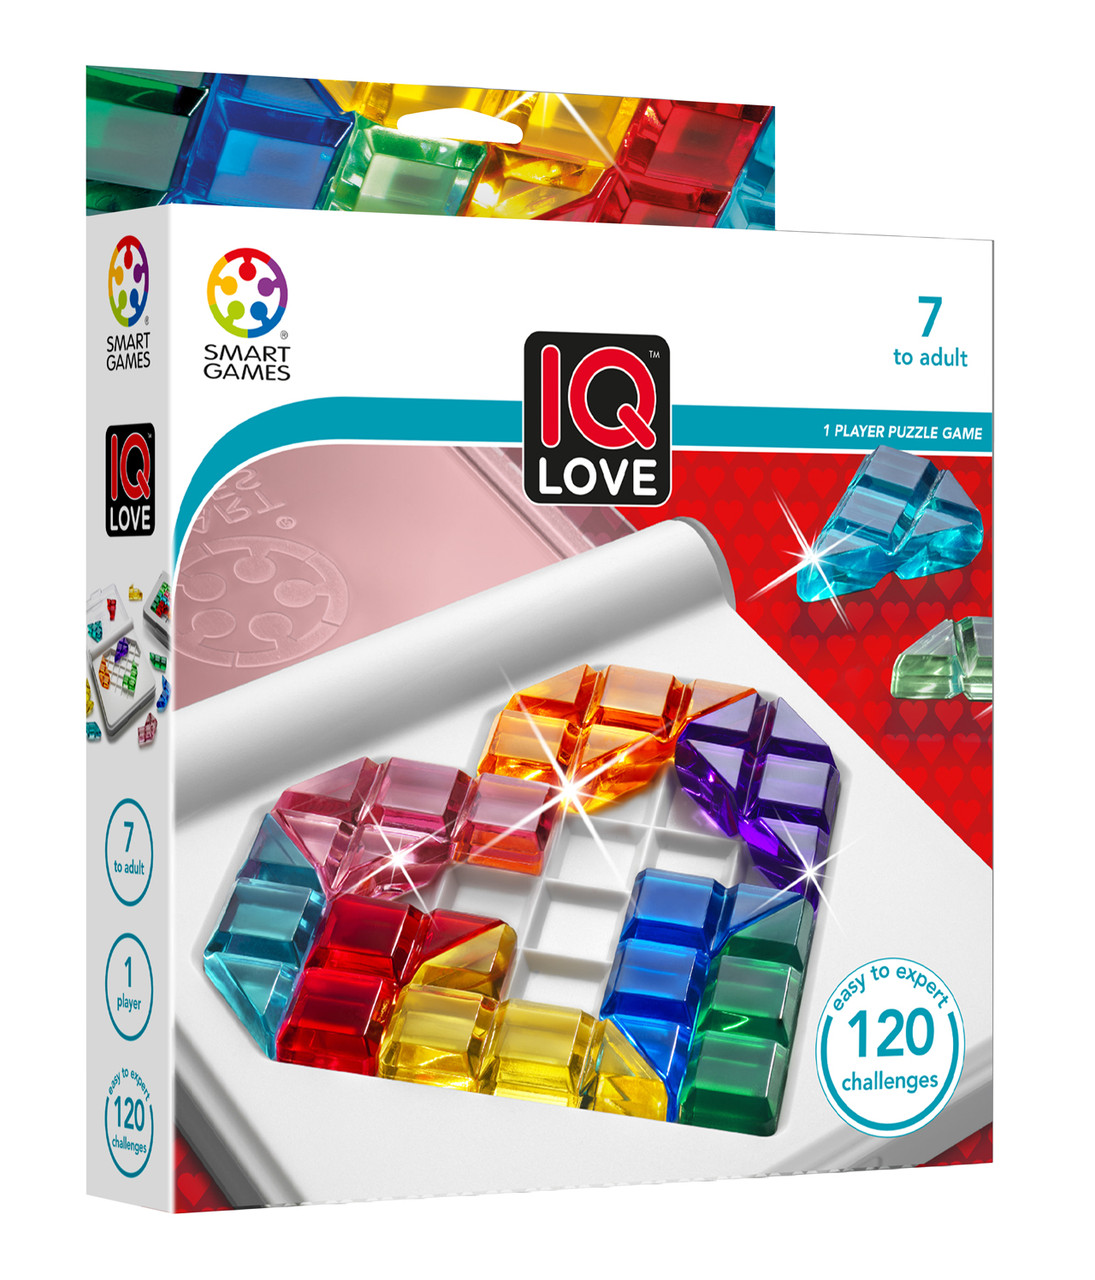 SmartGames SG 302 IQ Love product packaging 2af93d 67197.1661174364